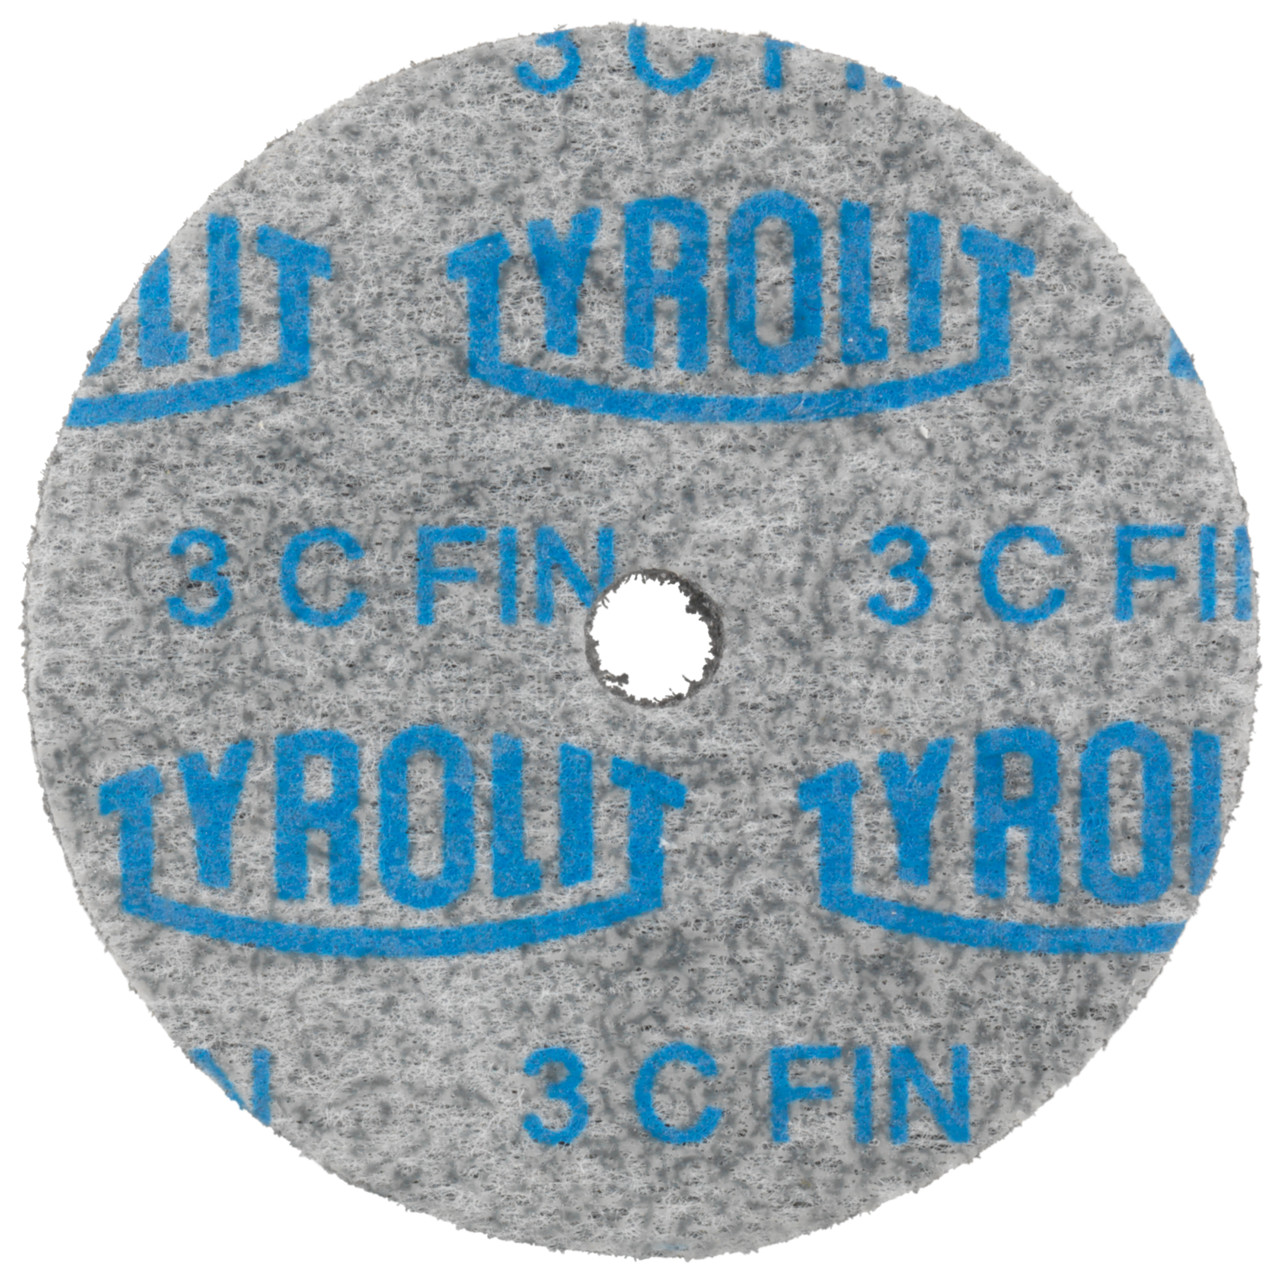 Tyrolit Discos compactos prensados DxDxH 25x25x4,8 Inserto universal, 6 A MEDIO, forma: 1, Art. 34201996